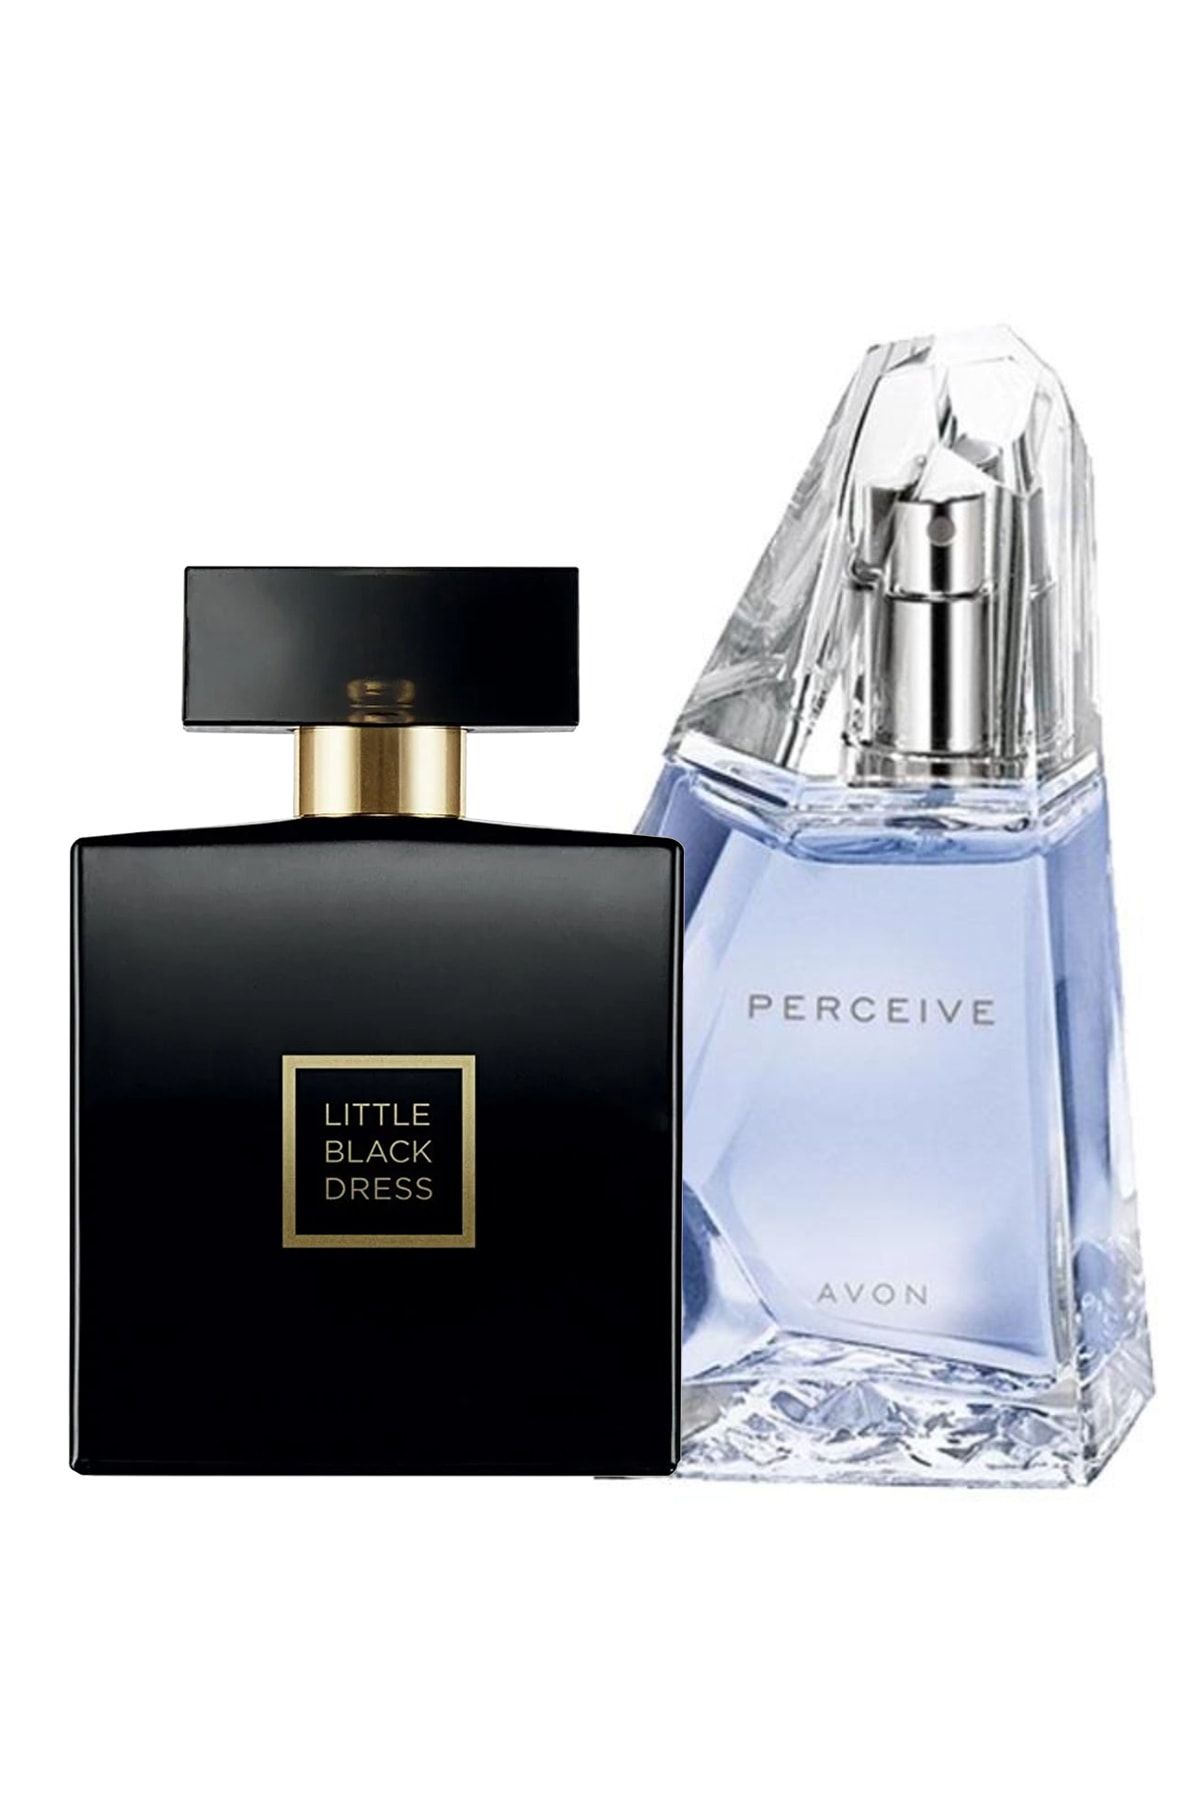 Avon Little Black Dress ve Perceive  Kadın Parfüm Paketi